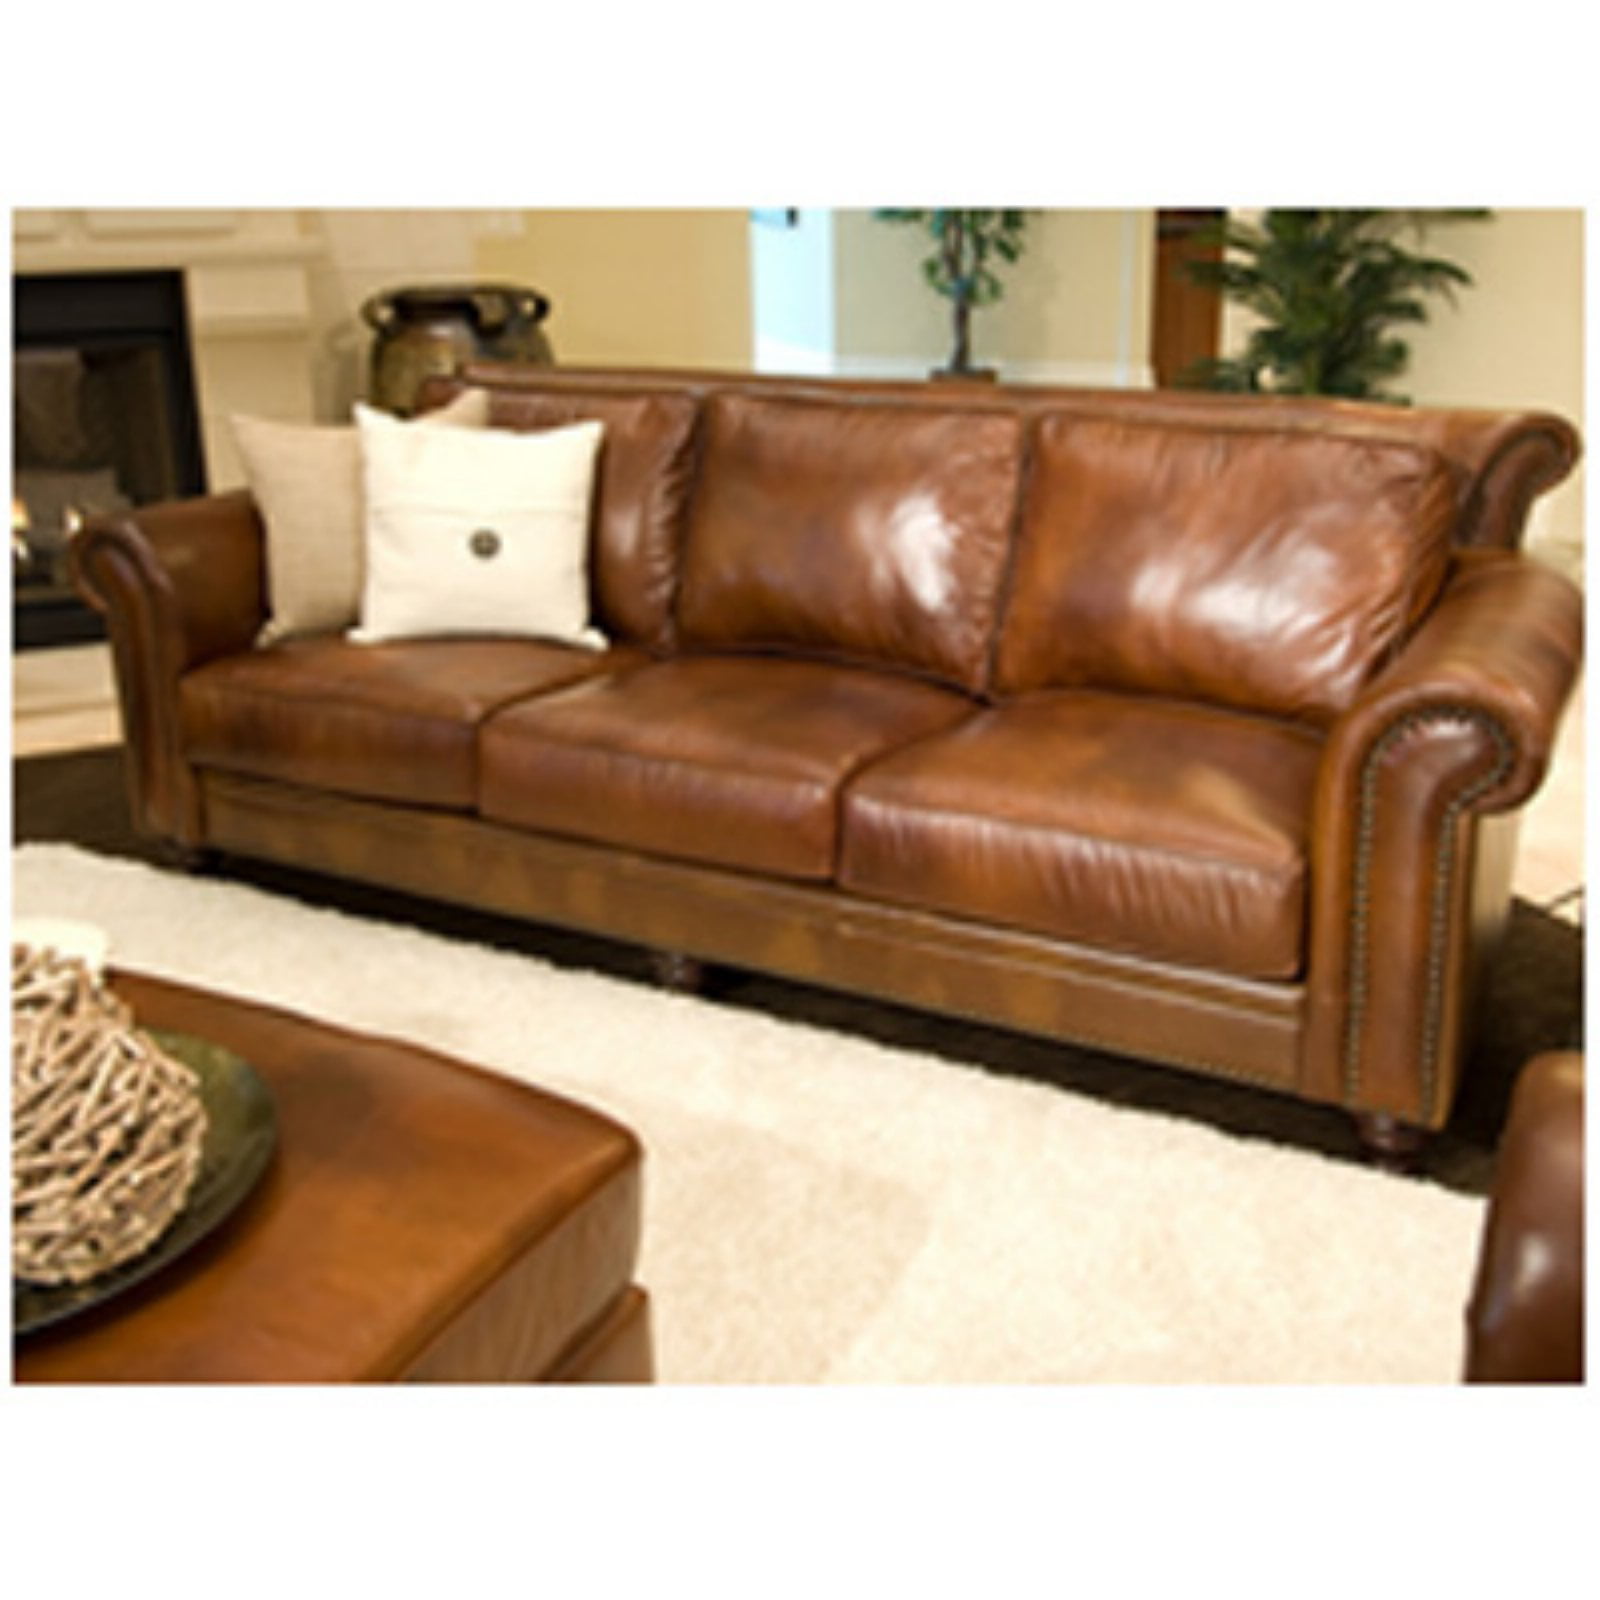 Paladia Top Grain Leather Sofa In, Leather Rustic Sofa